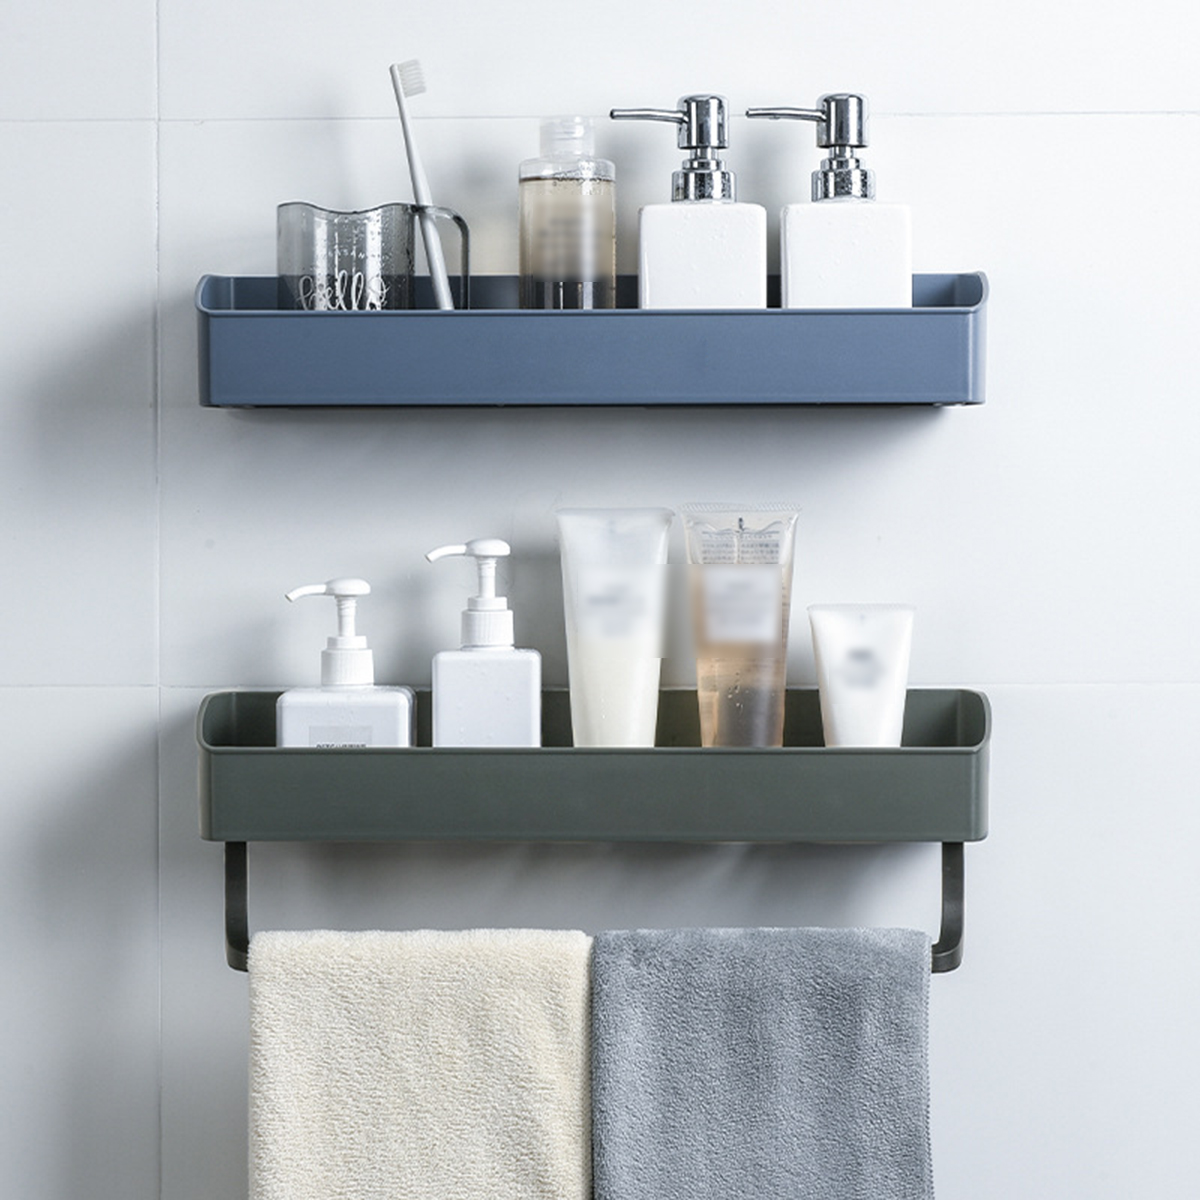 Bathroom-Wall-Mounted-Kitchen-Storage-Rack-Towel-Shelf-Organizer-Shower-Shampoo-Holder-1663521-7